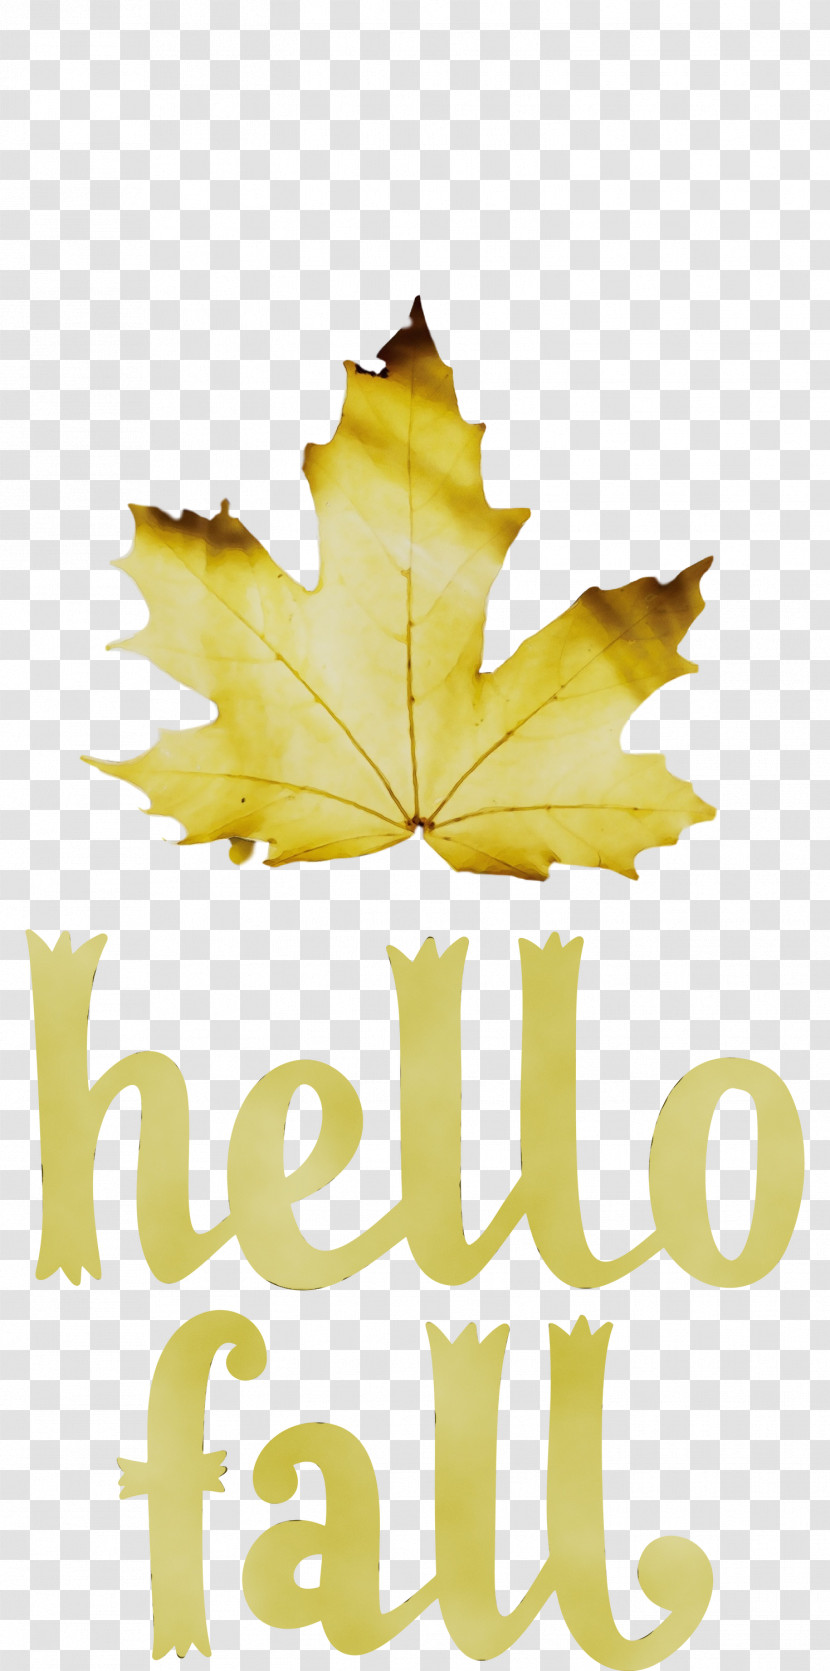 Leaf Maple Leaf / M Yellow Font Tree Transparent PNG